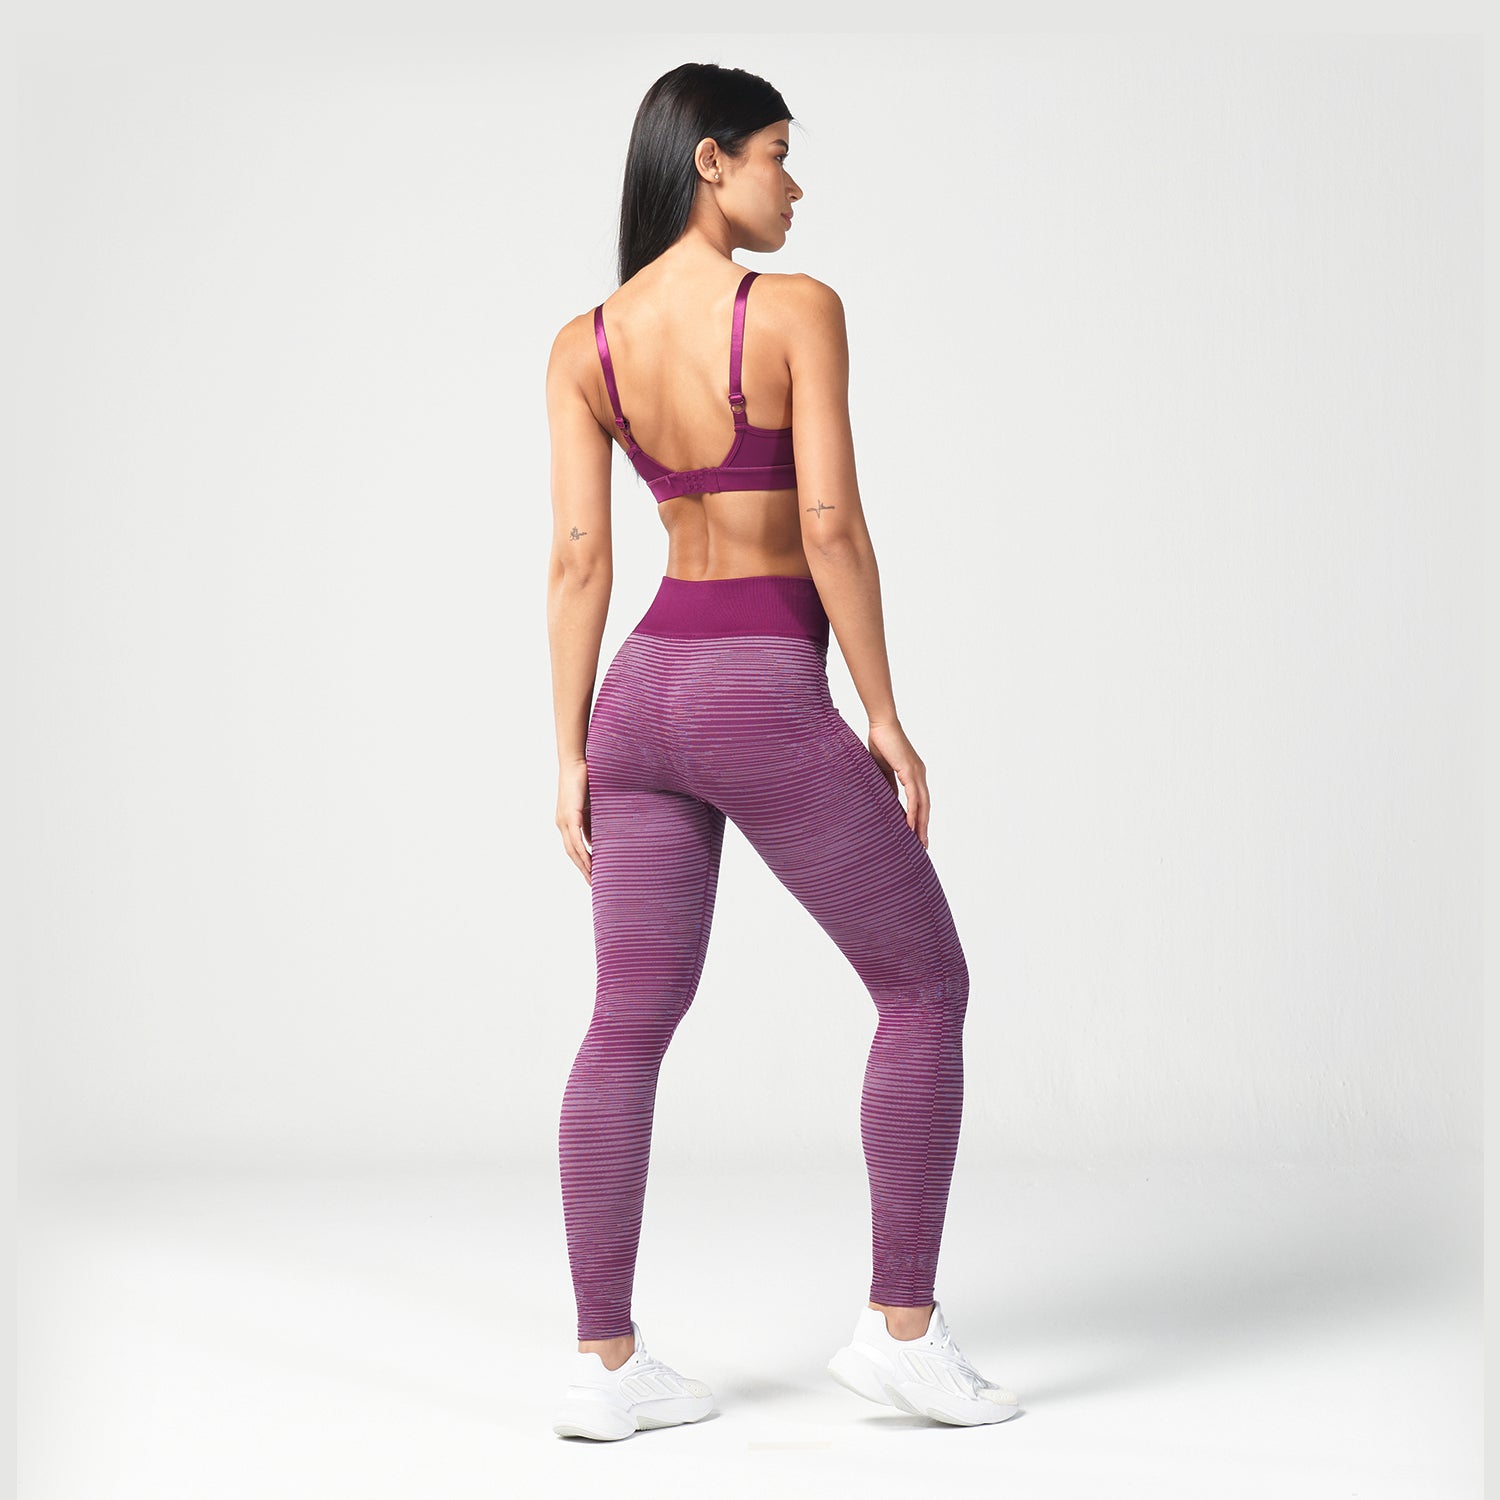 squatwolf-workout-clothes-infinity-luna-bra-dark-purple-sports-bra-for-gym